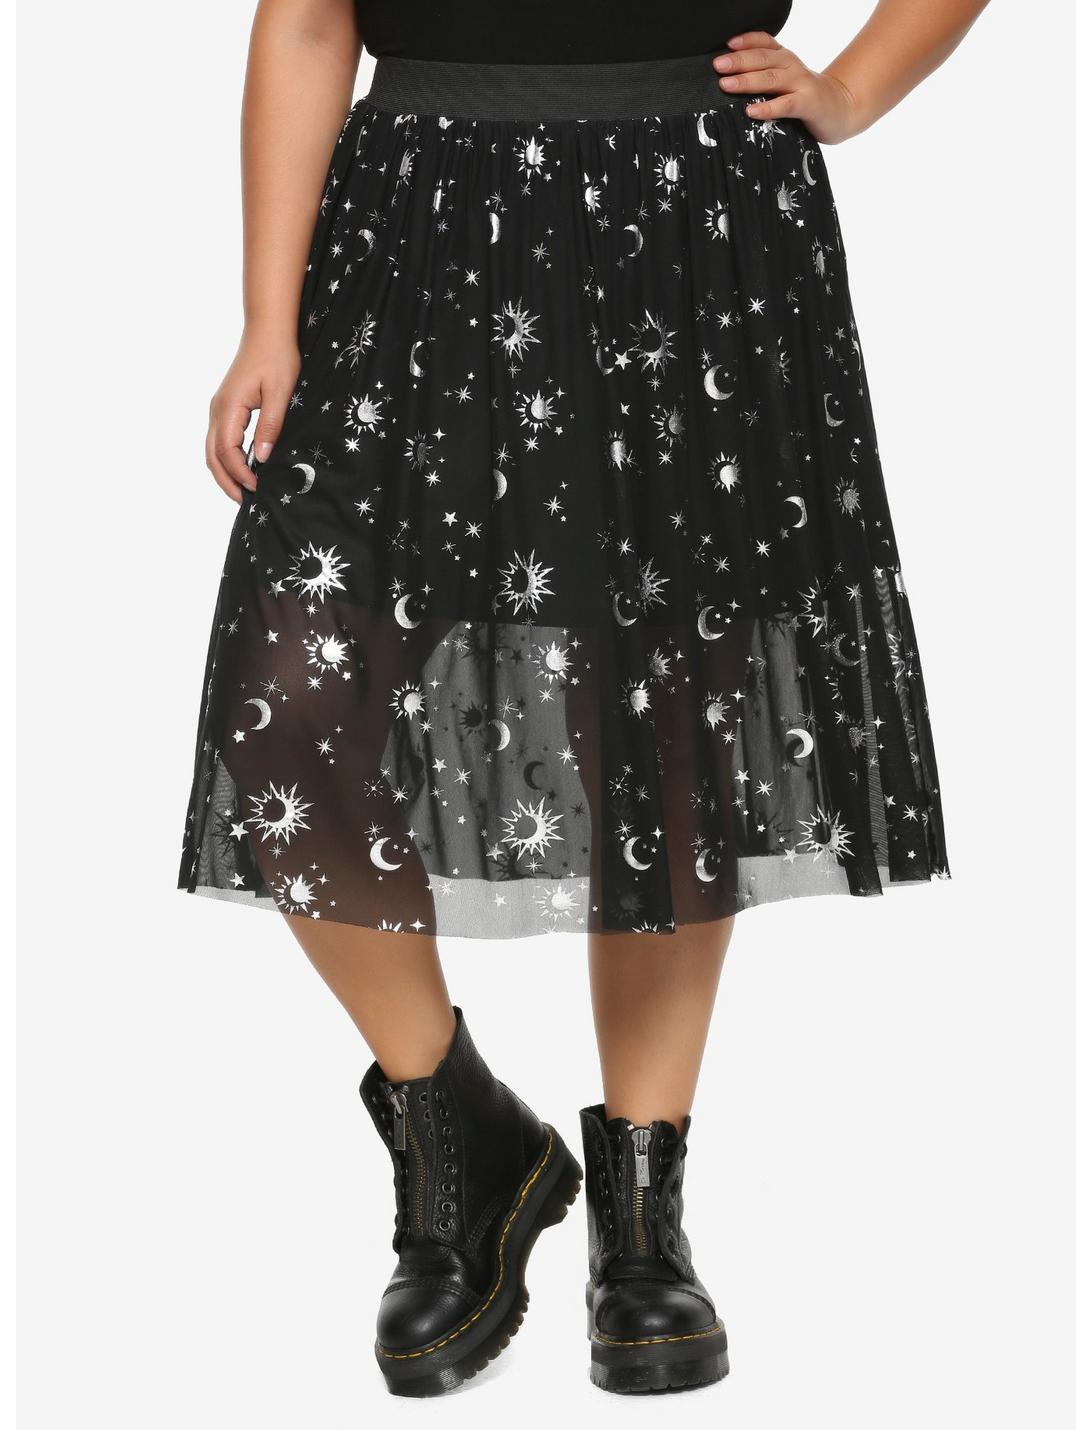 Celestial Mesh Skirt Plus Size, MULTI, hi-res